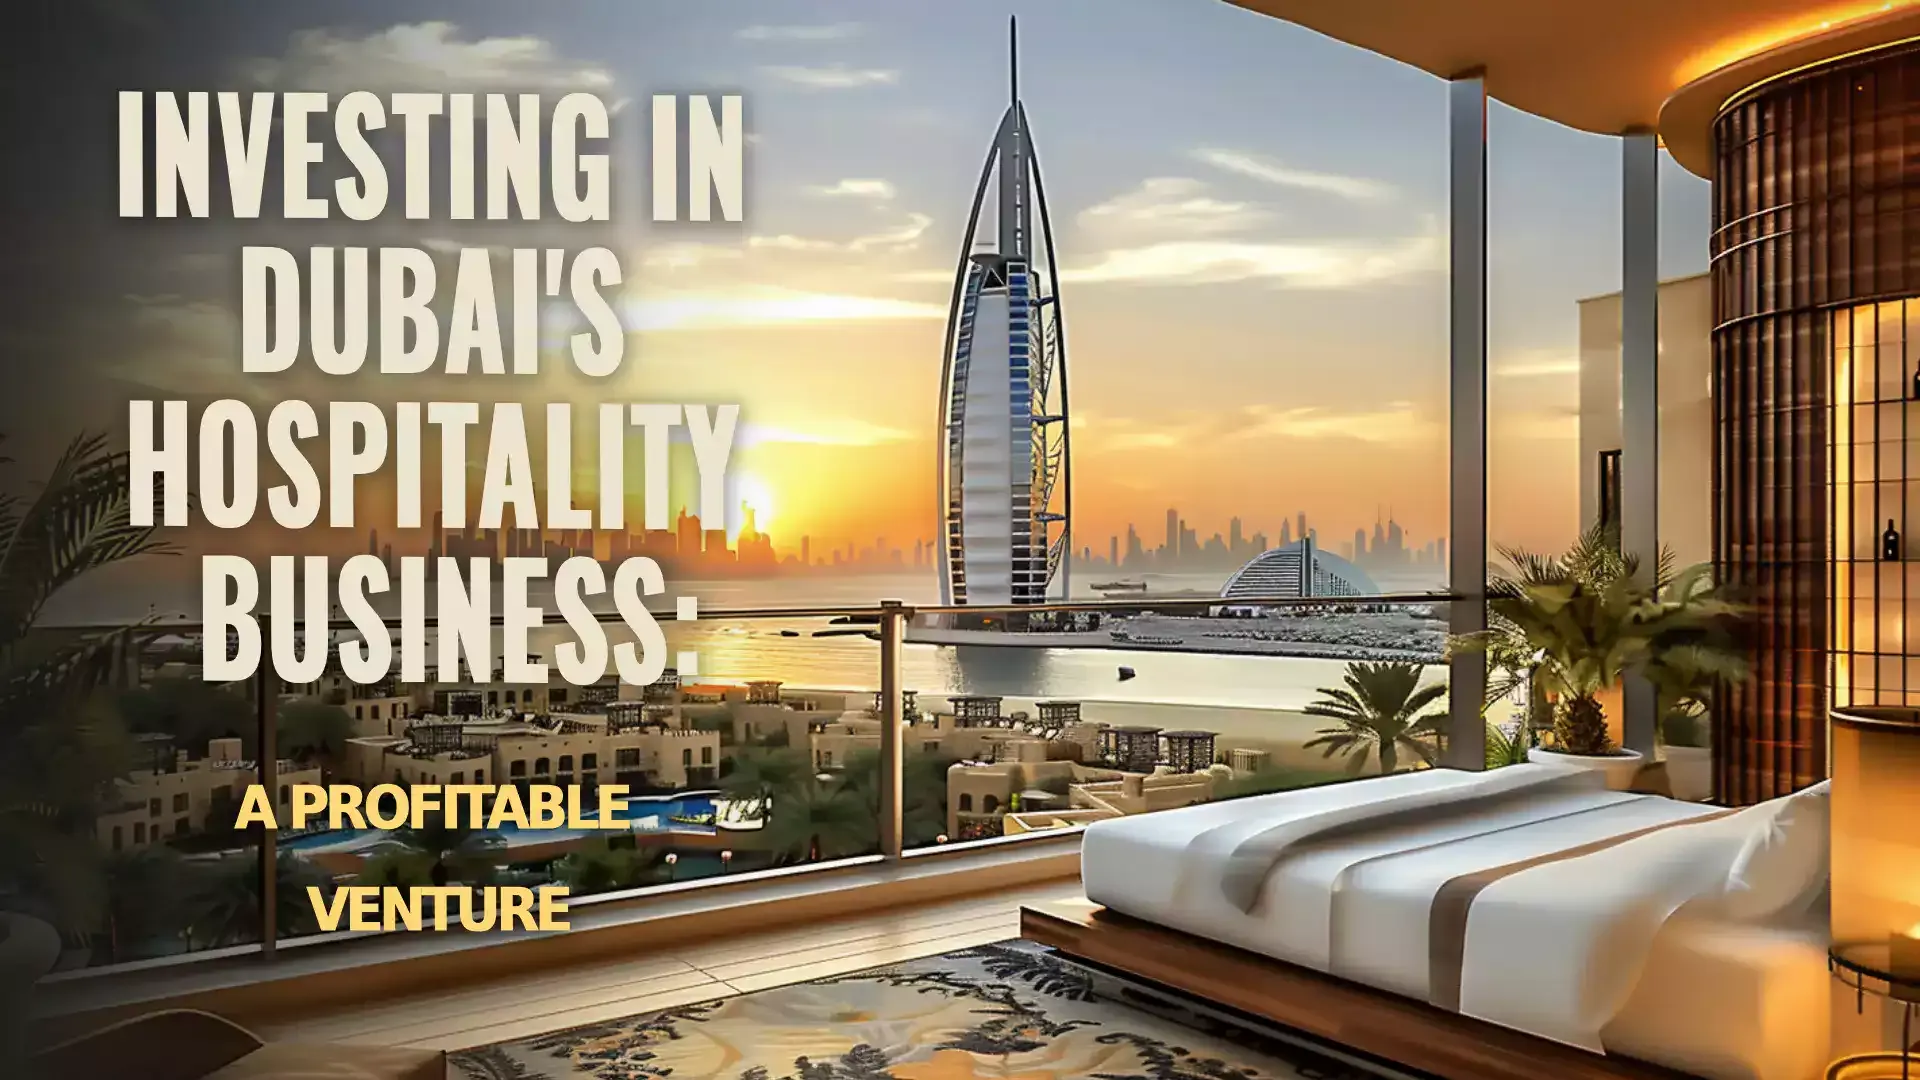 Image illustrating investment opportunities in Dubai's vibrant market